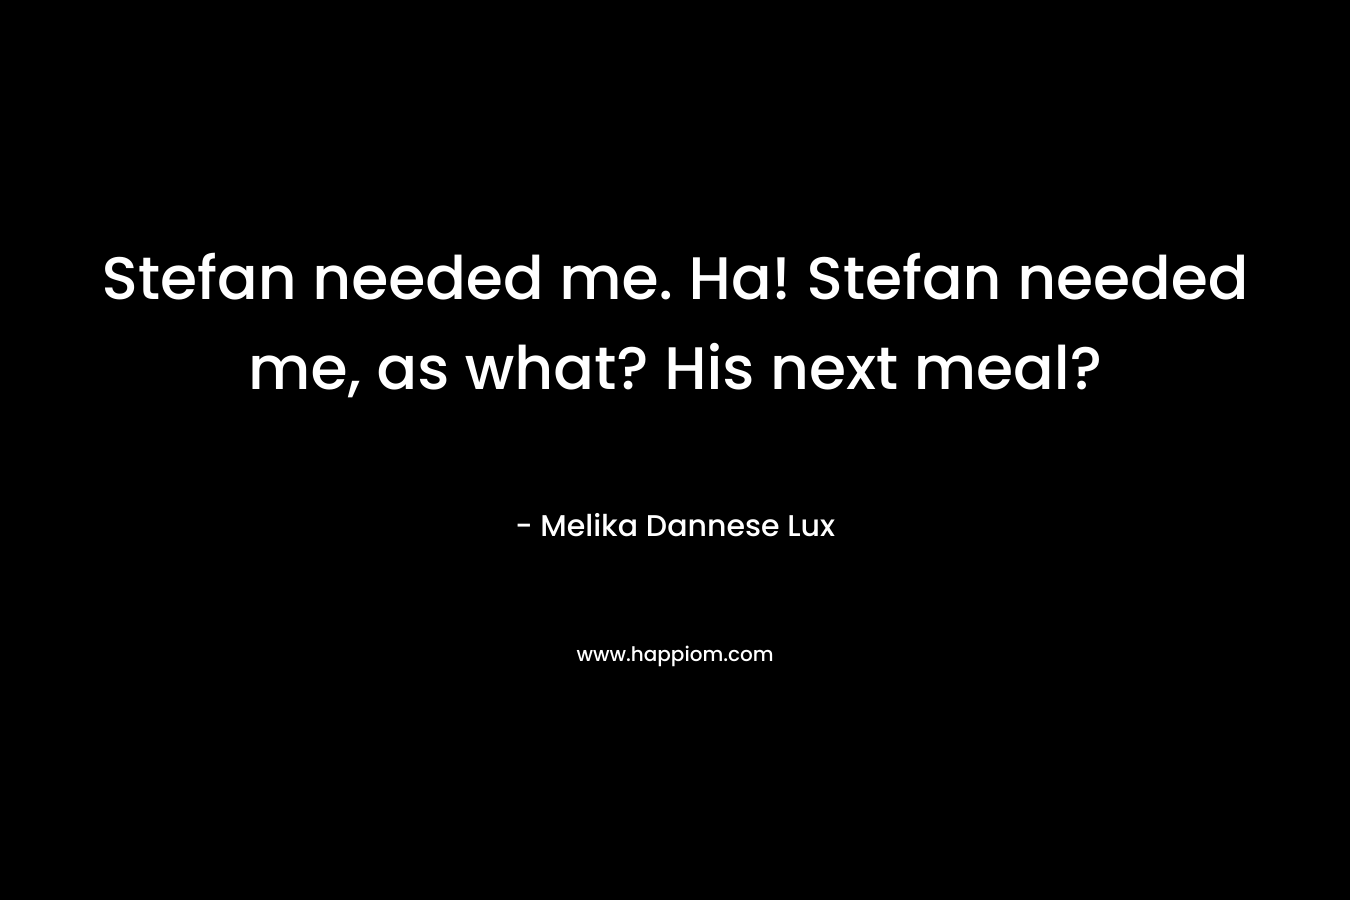 Stefan needed me. Ha! Stefan needed me, as what? His next meal?